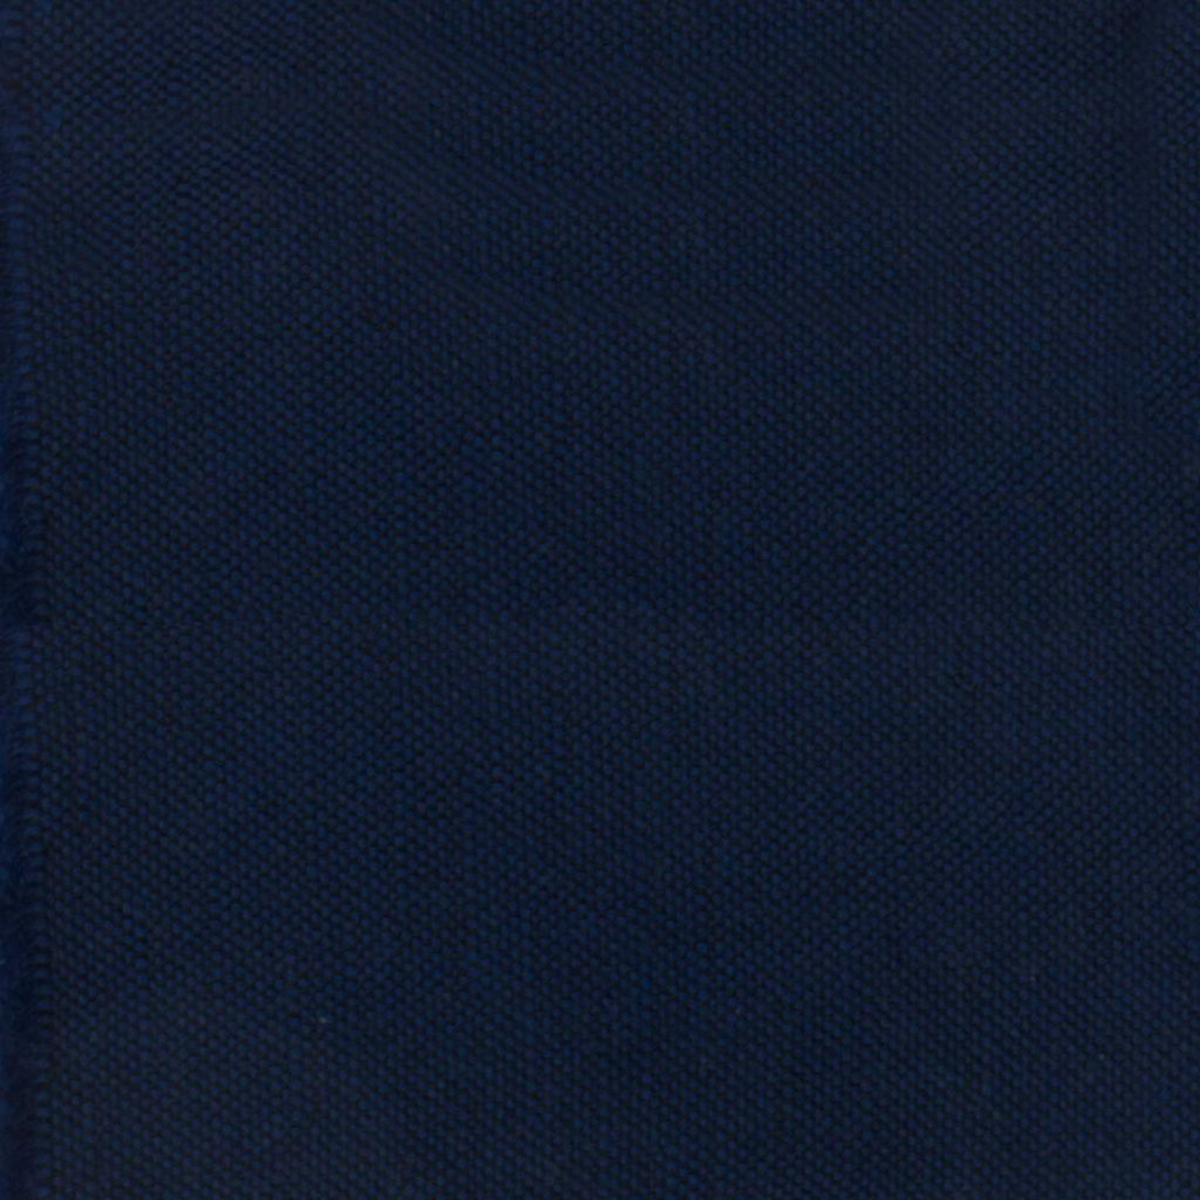 linen indigo cushion for club teak slipper thumbnail image